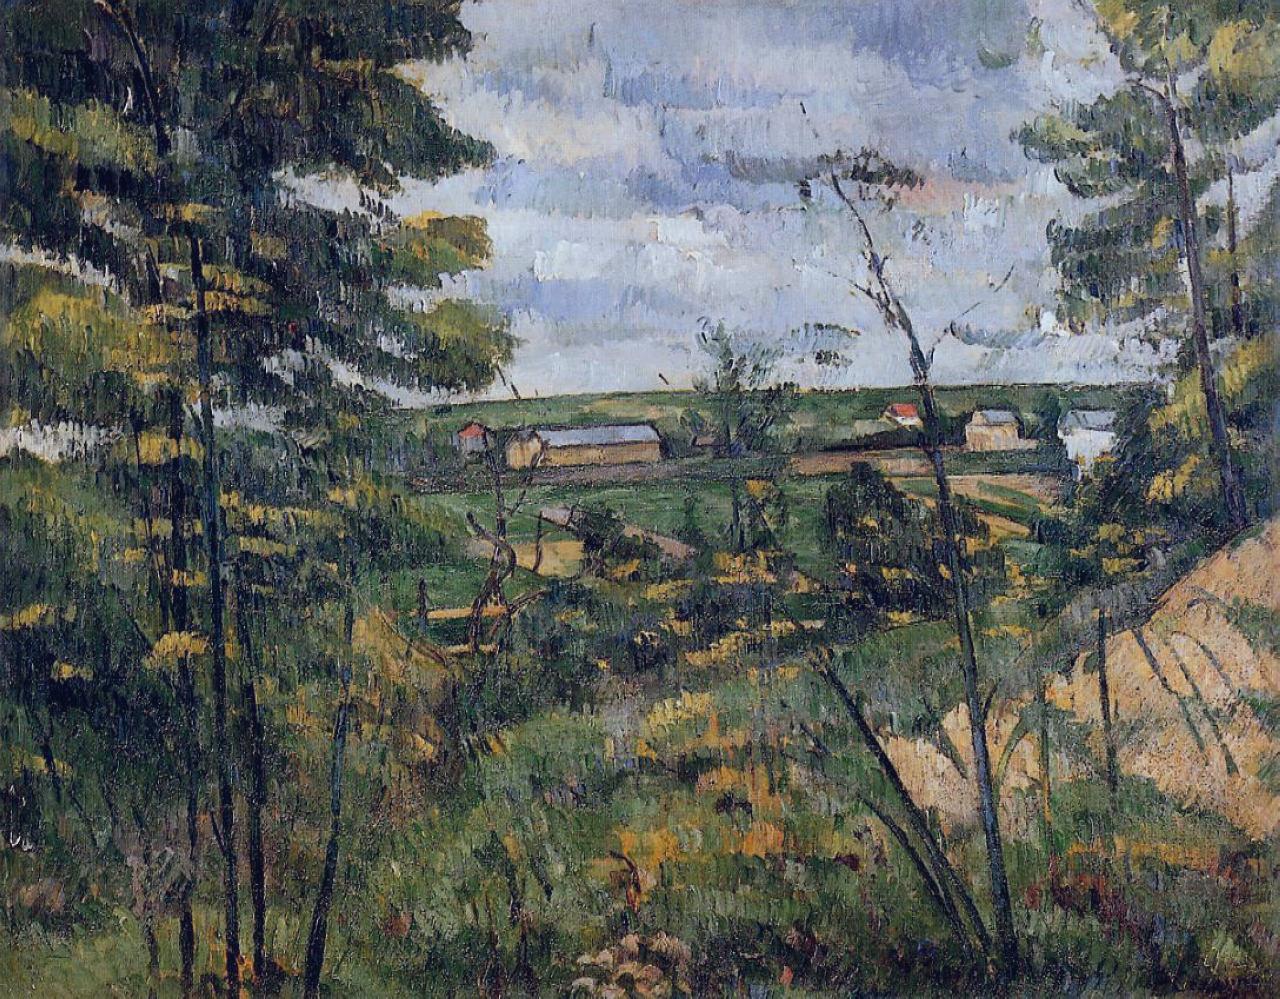 Paul Cezanne Paintings 1839-1906 Art nrg - In the Oise Valley, 1880.jpeg